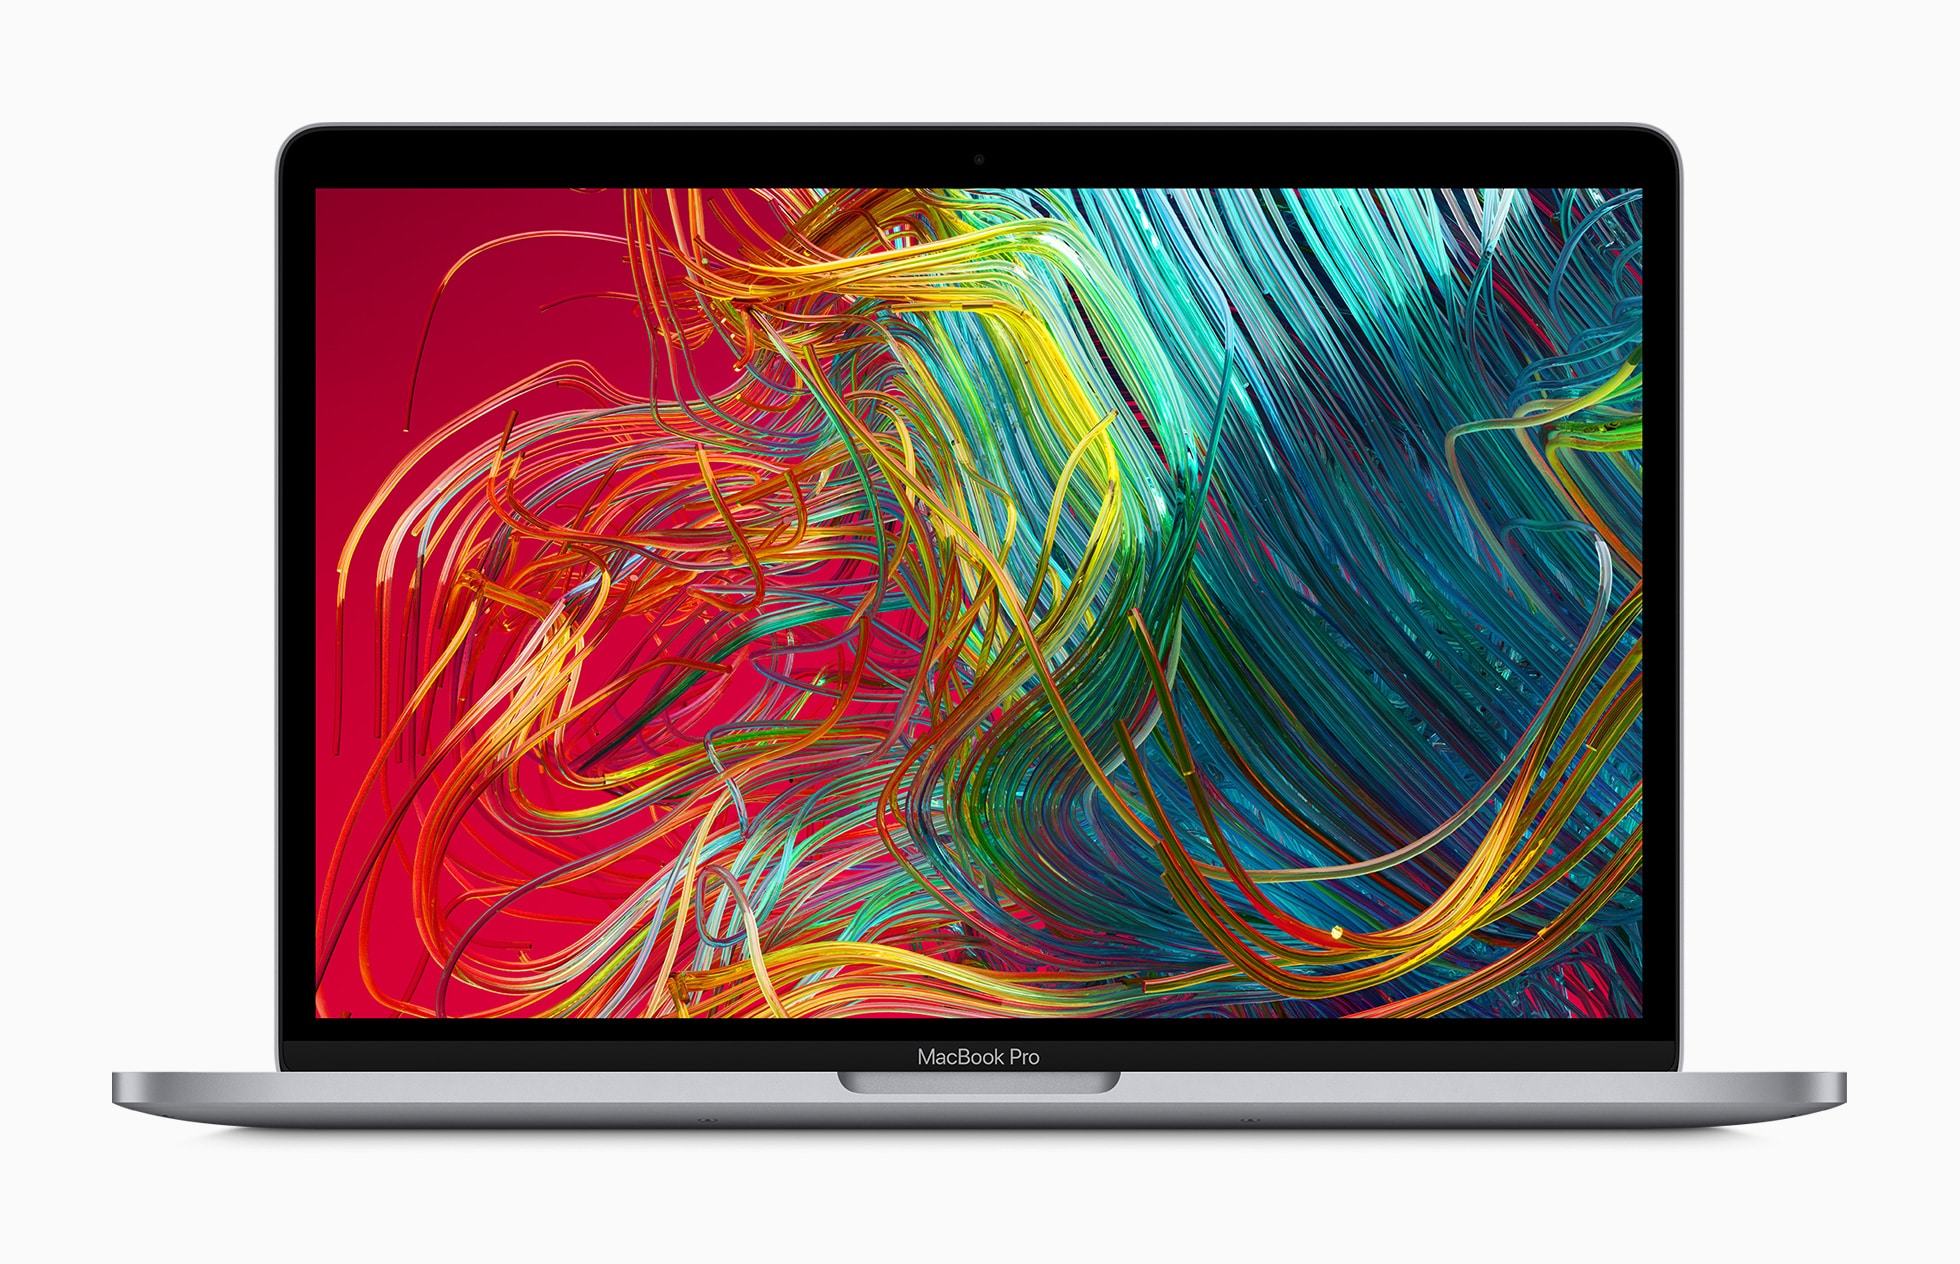 Anatel kiitis heaks uue 13 "MacBook Pro ja" uue "Powerbeats Pro